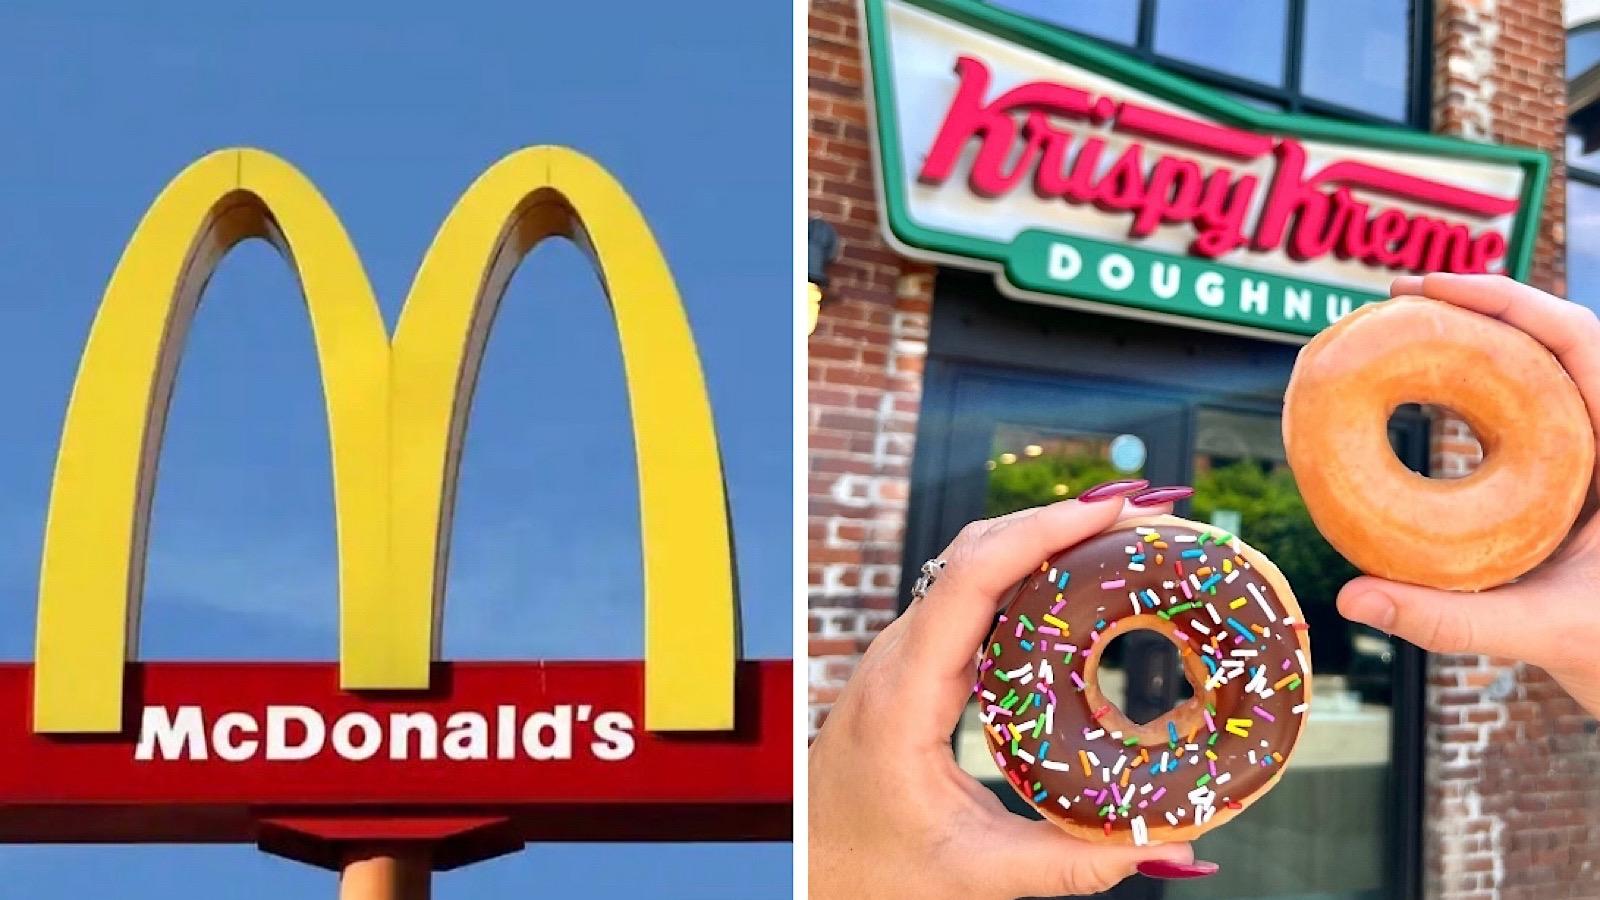 mcdonald's and Krispy Kreme collab